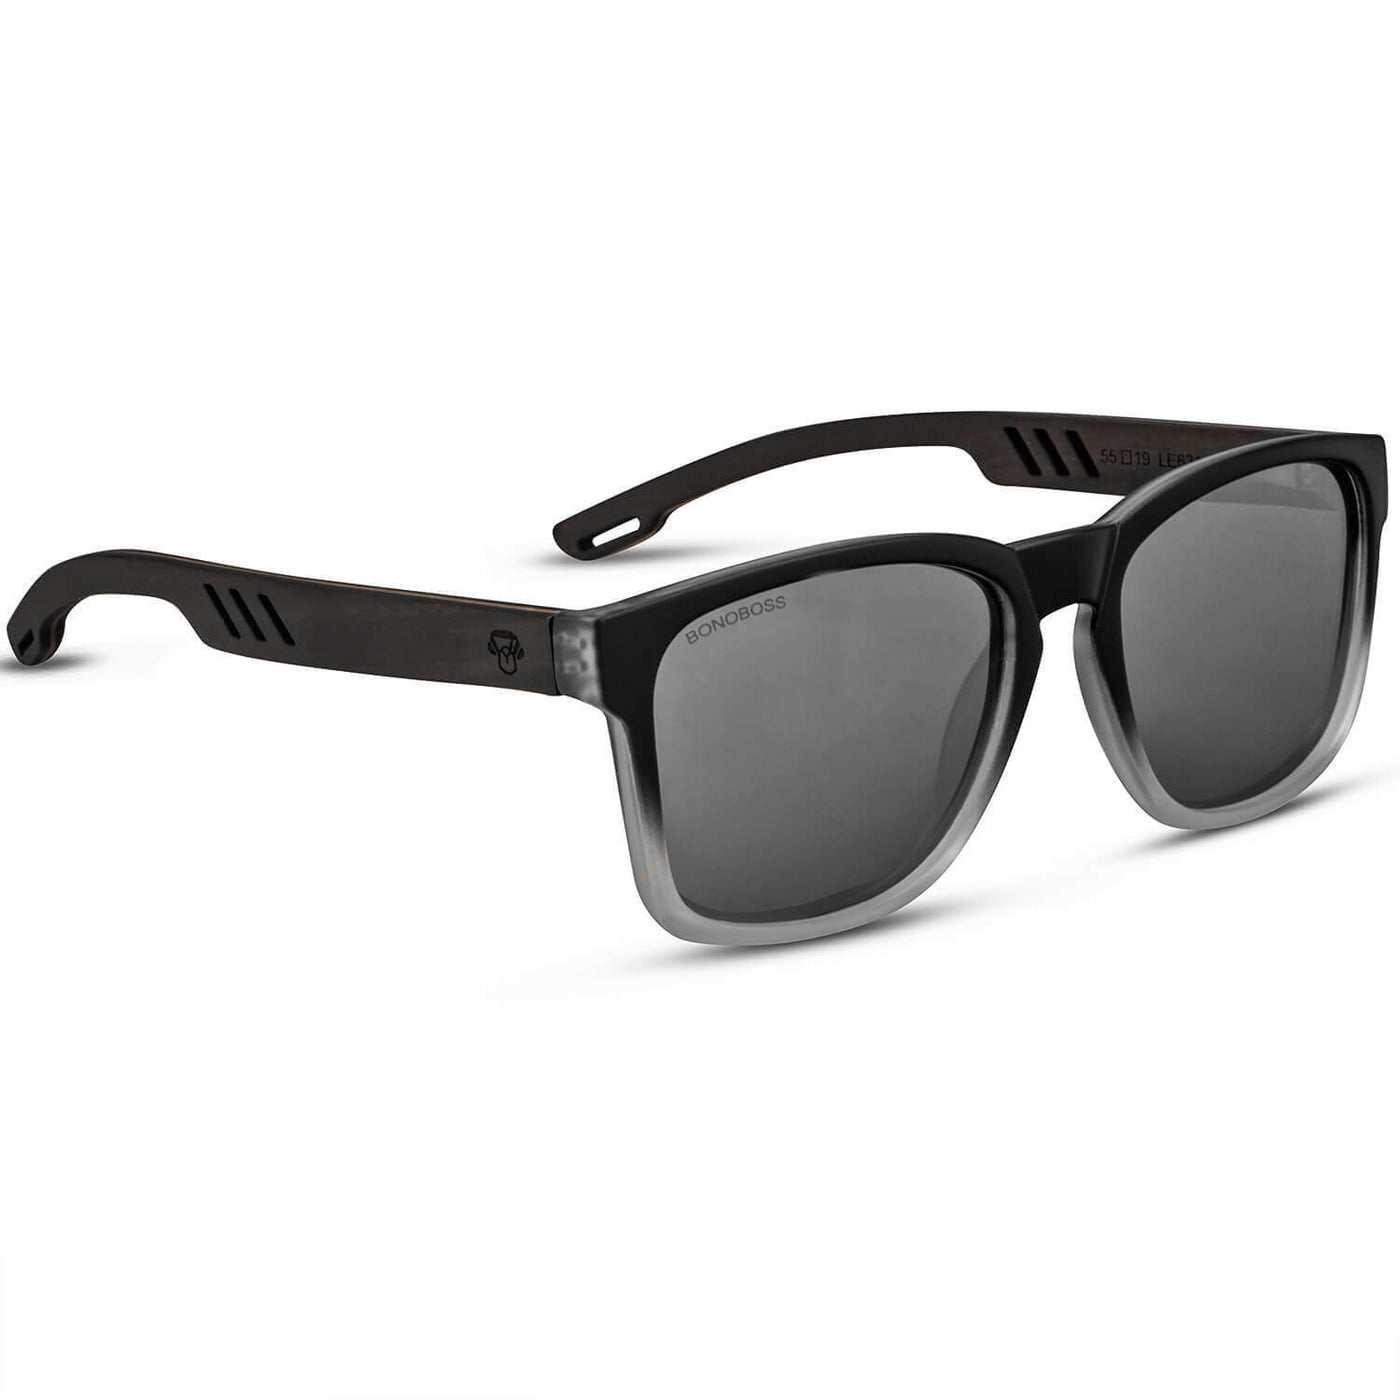 anteojos de sol polarizados redondos de color negro con lentes de color gris con lentes grises espejados